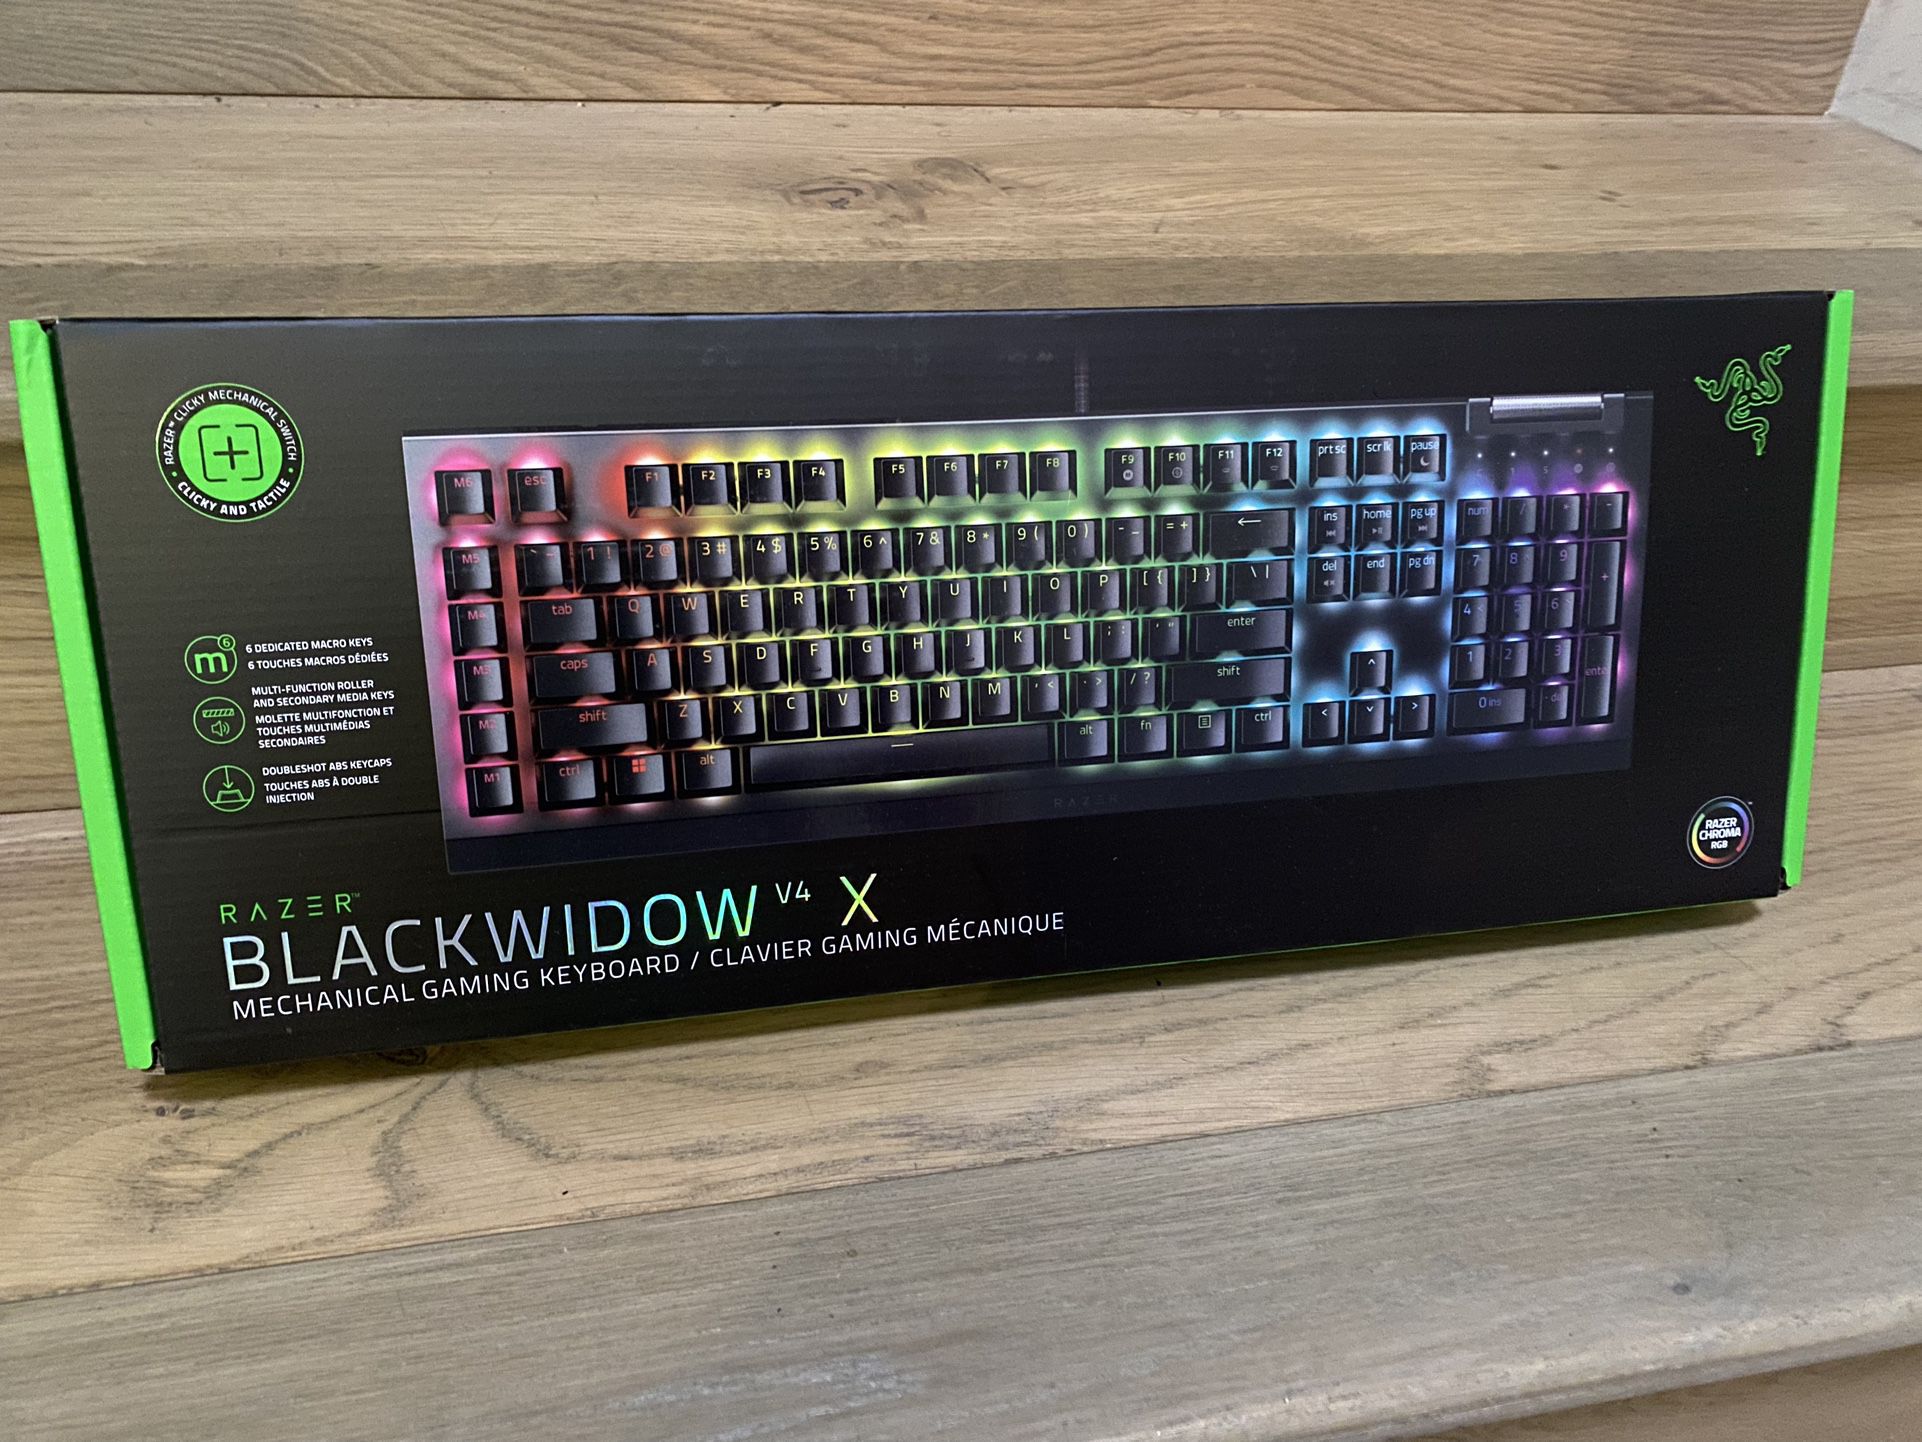 Razer Blackwidow V4 X Mechanical Gaming Keyboard